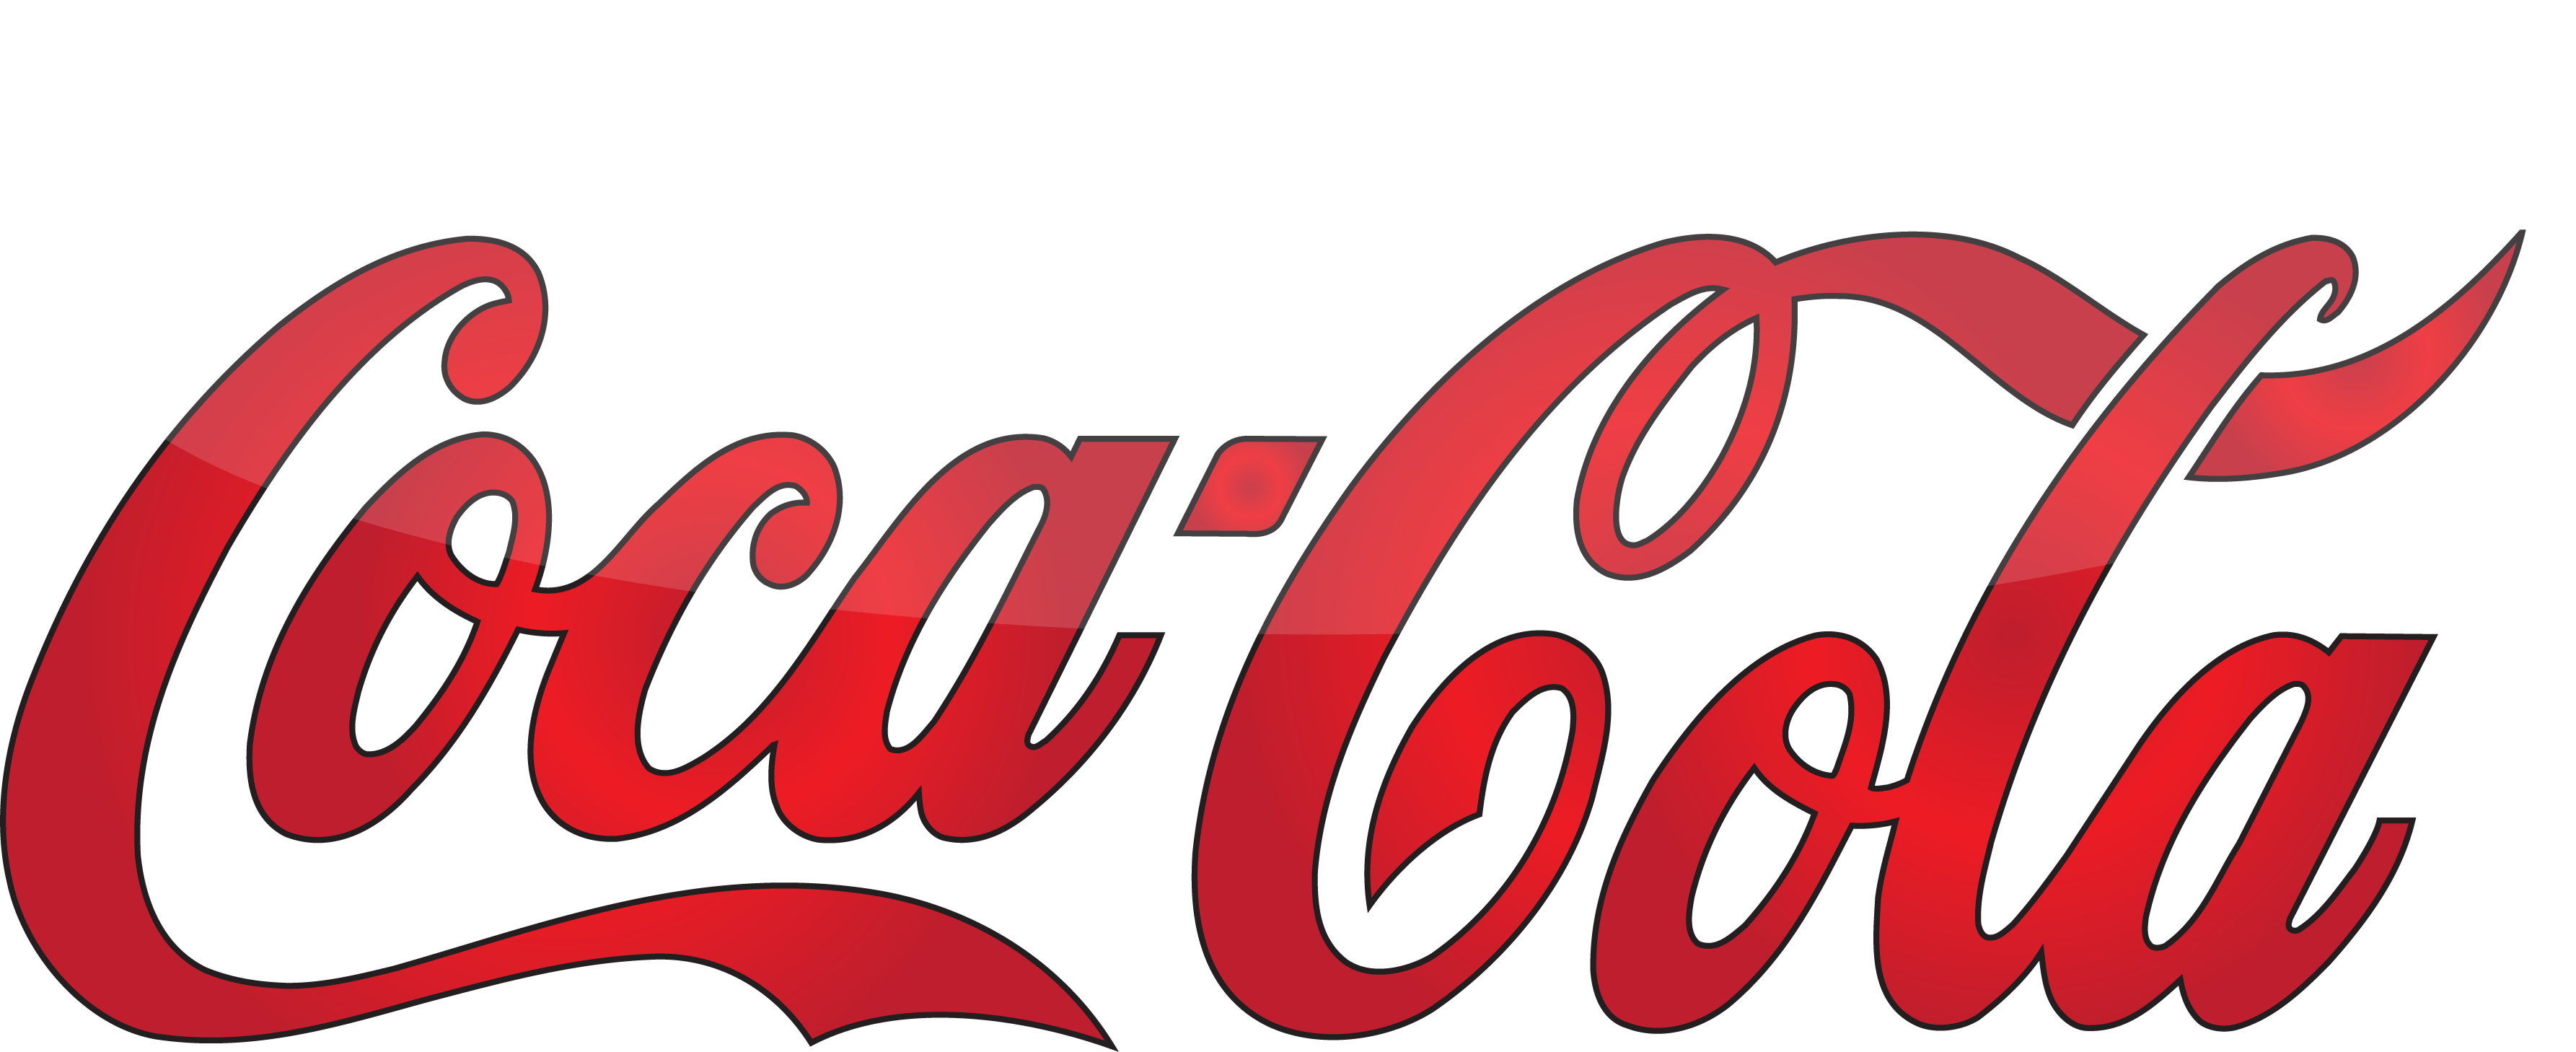 Coca-cola Logo And Symbol, Me